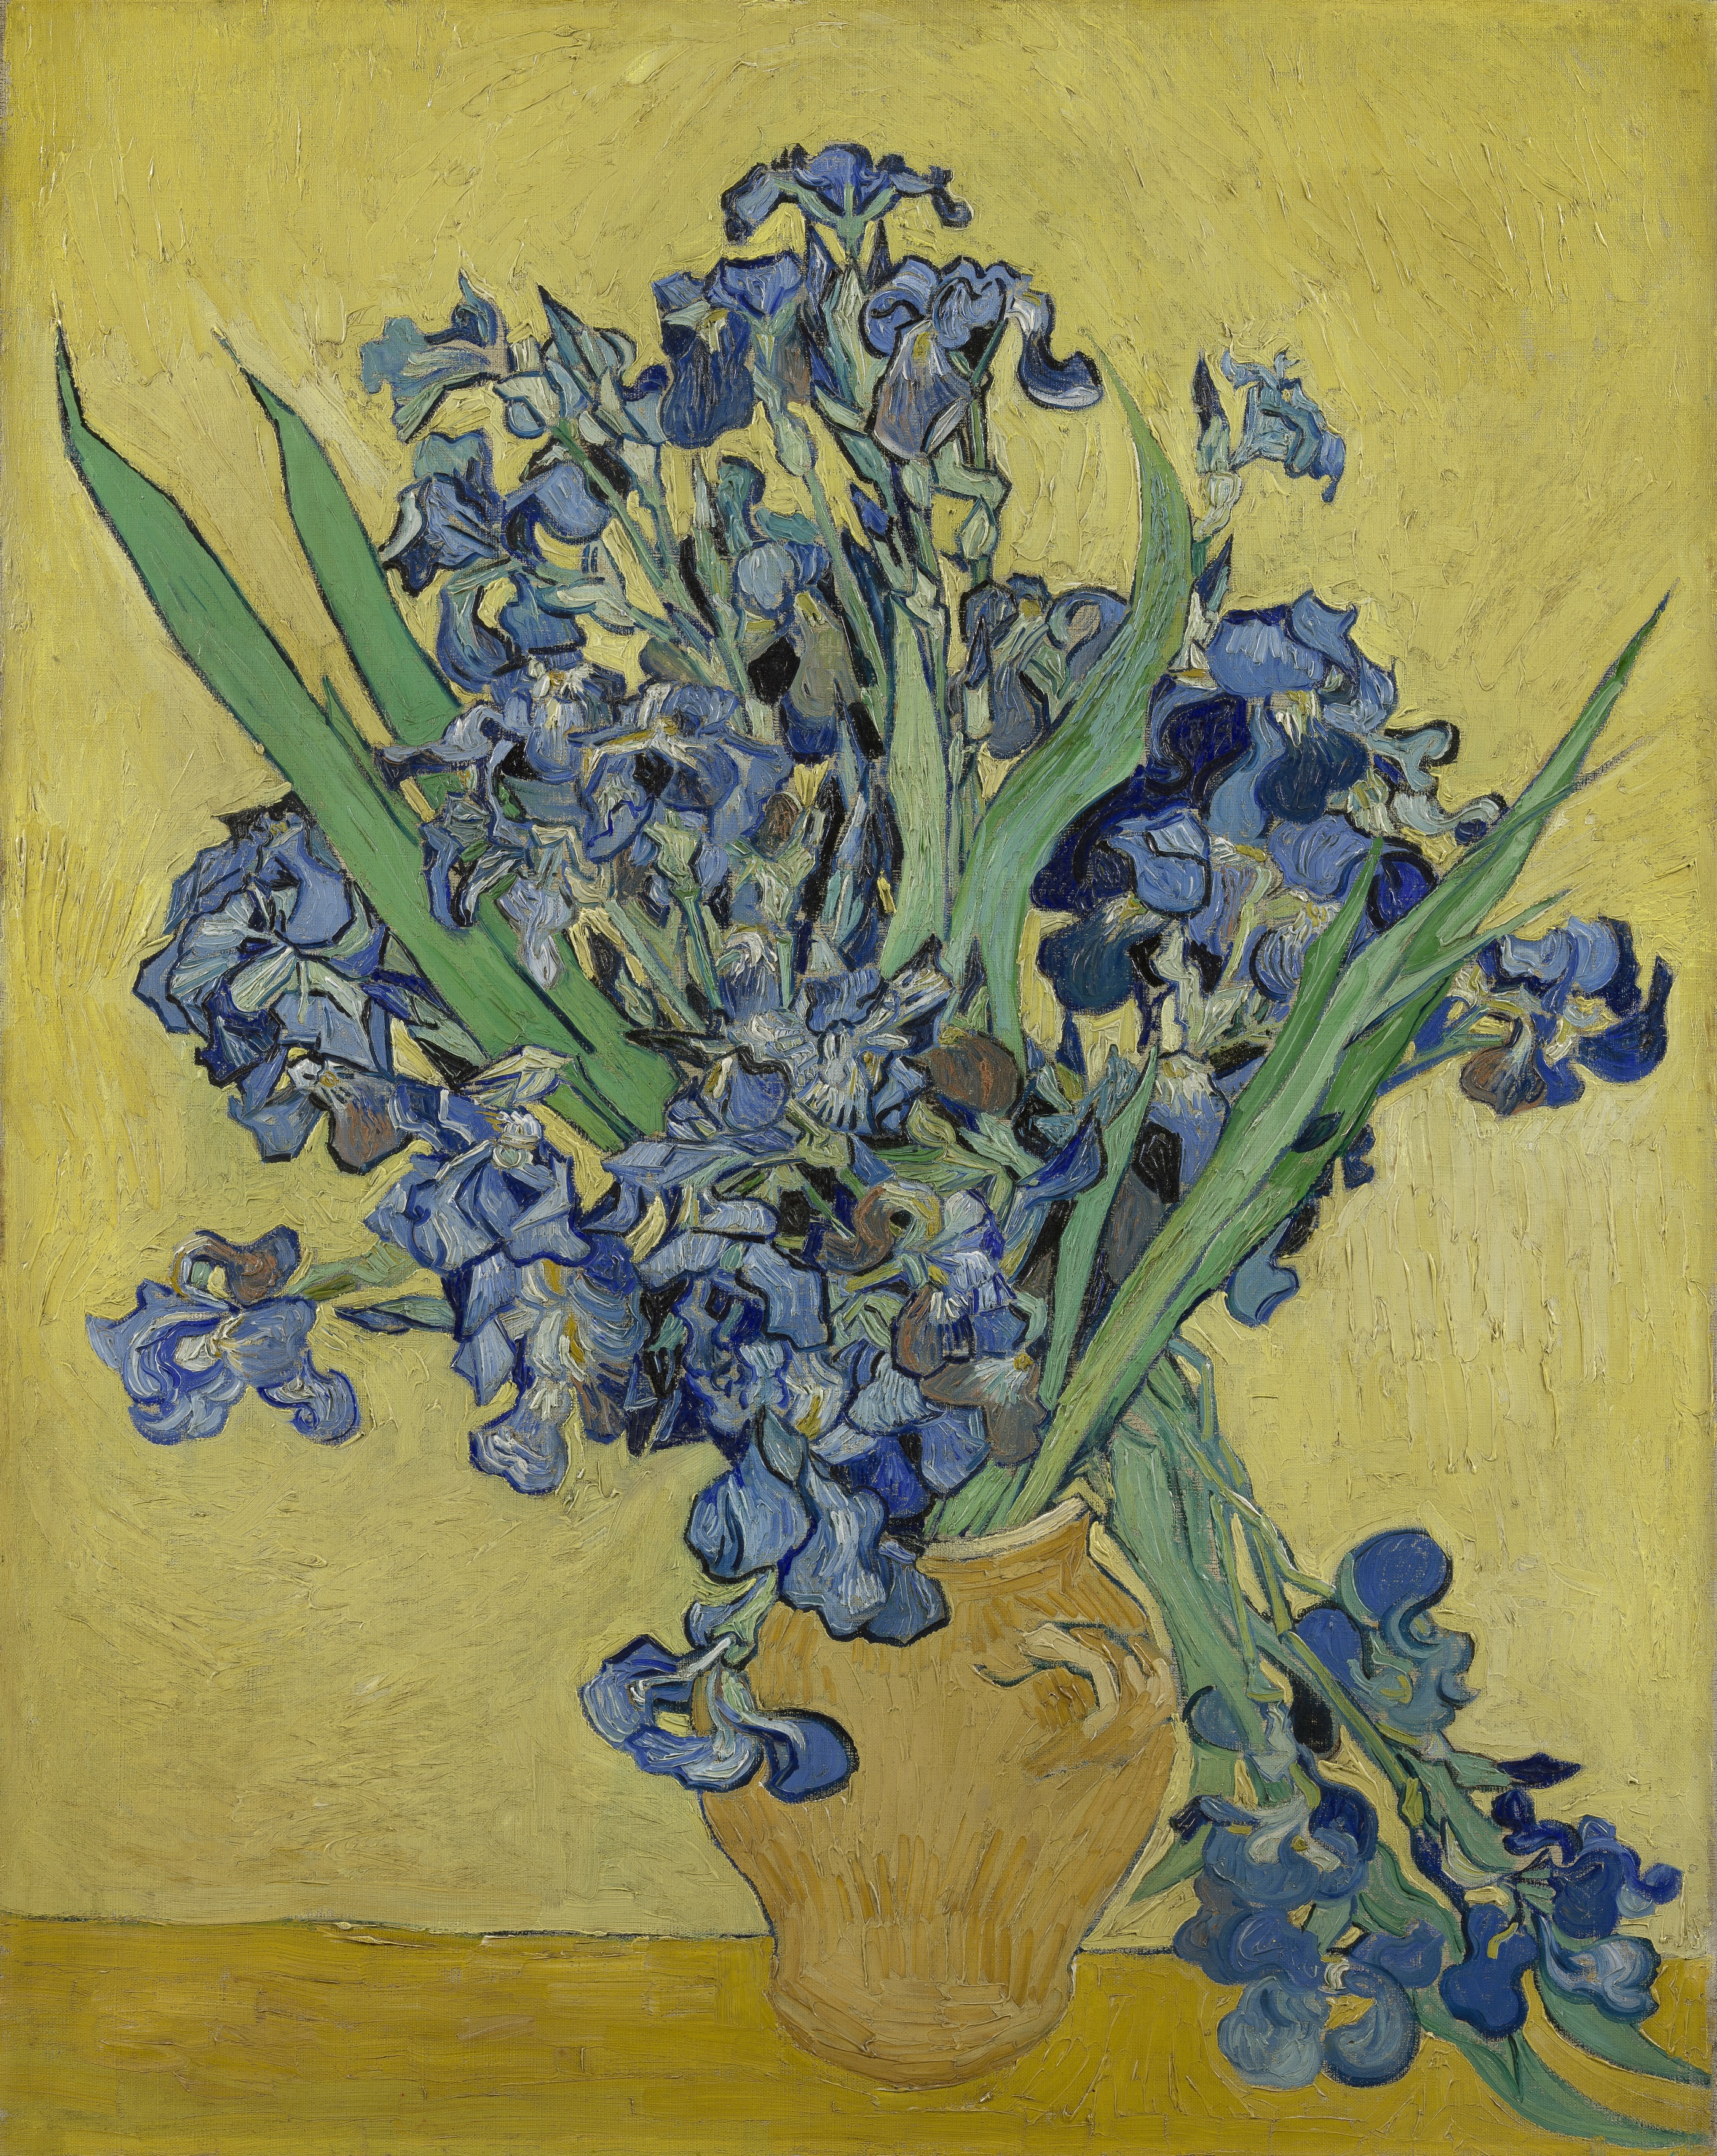 鳶尾花 by Vincent van Gogh - 1890年5月 - 92.7 x 73.9 公分 